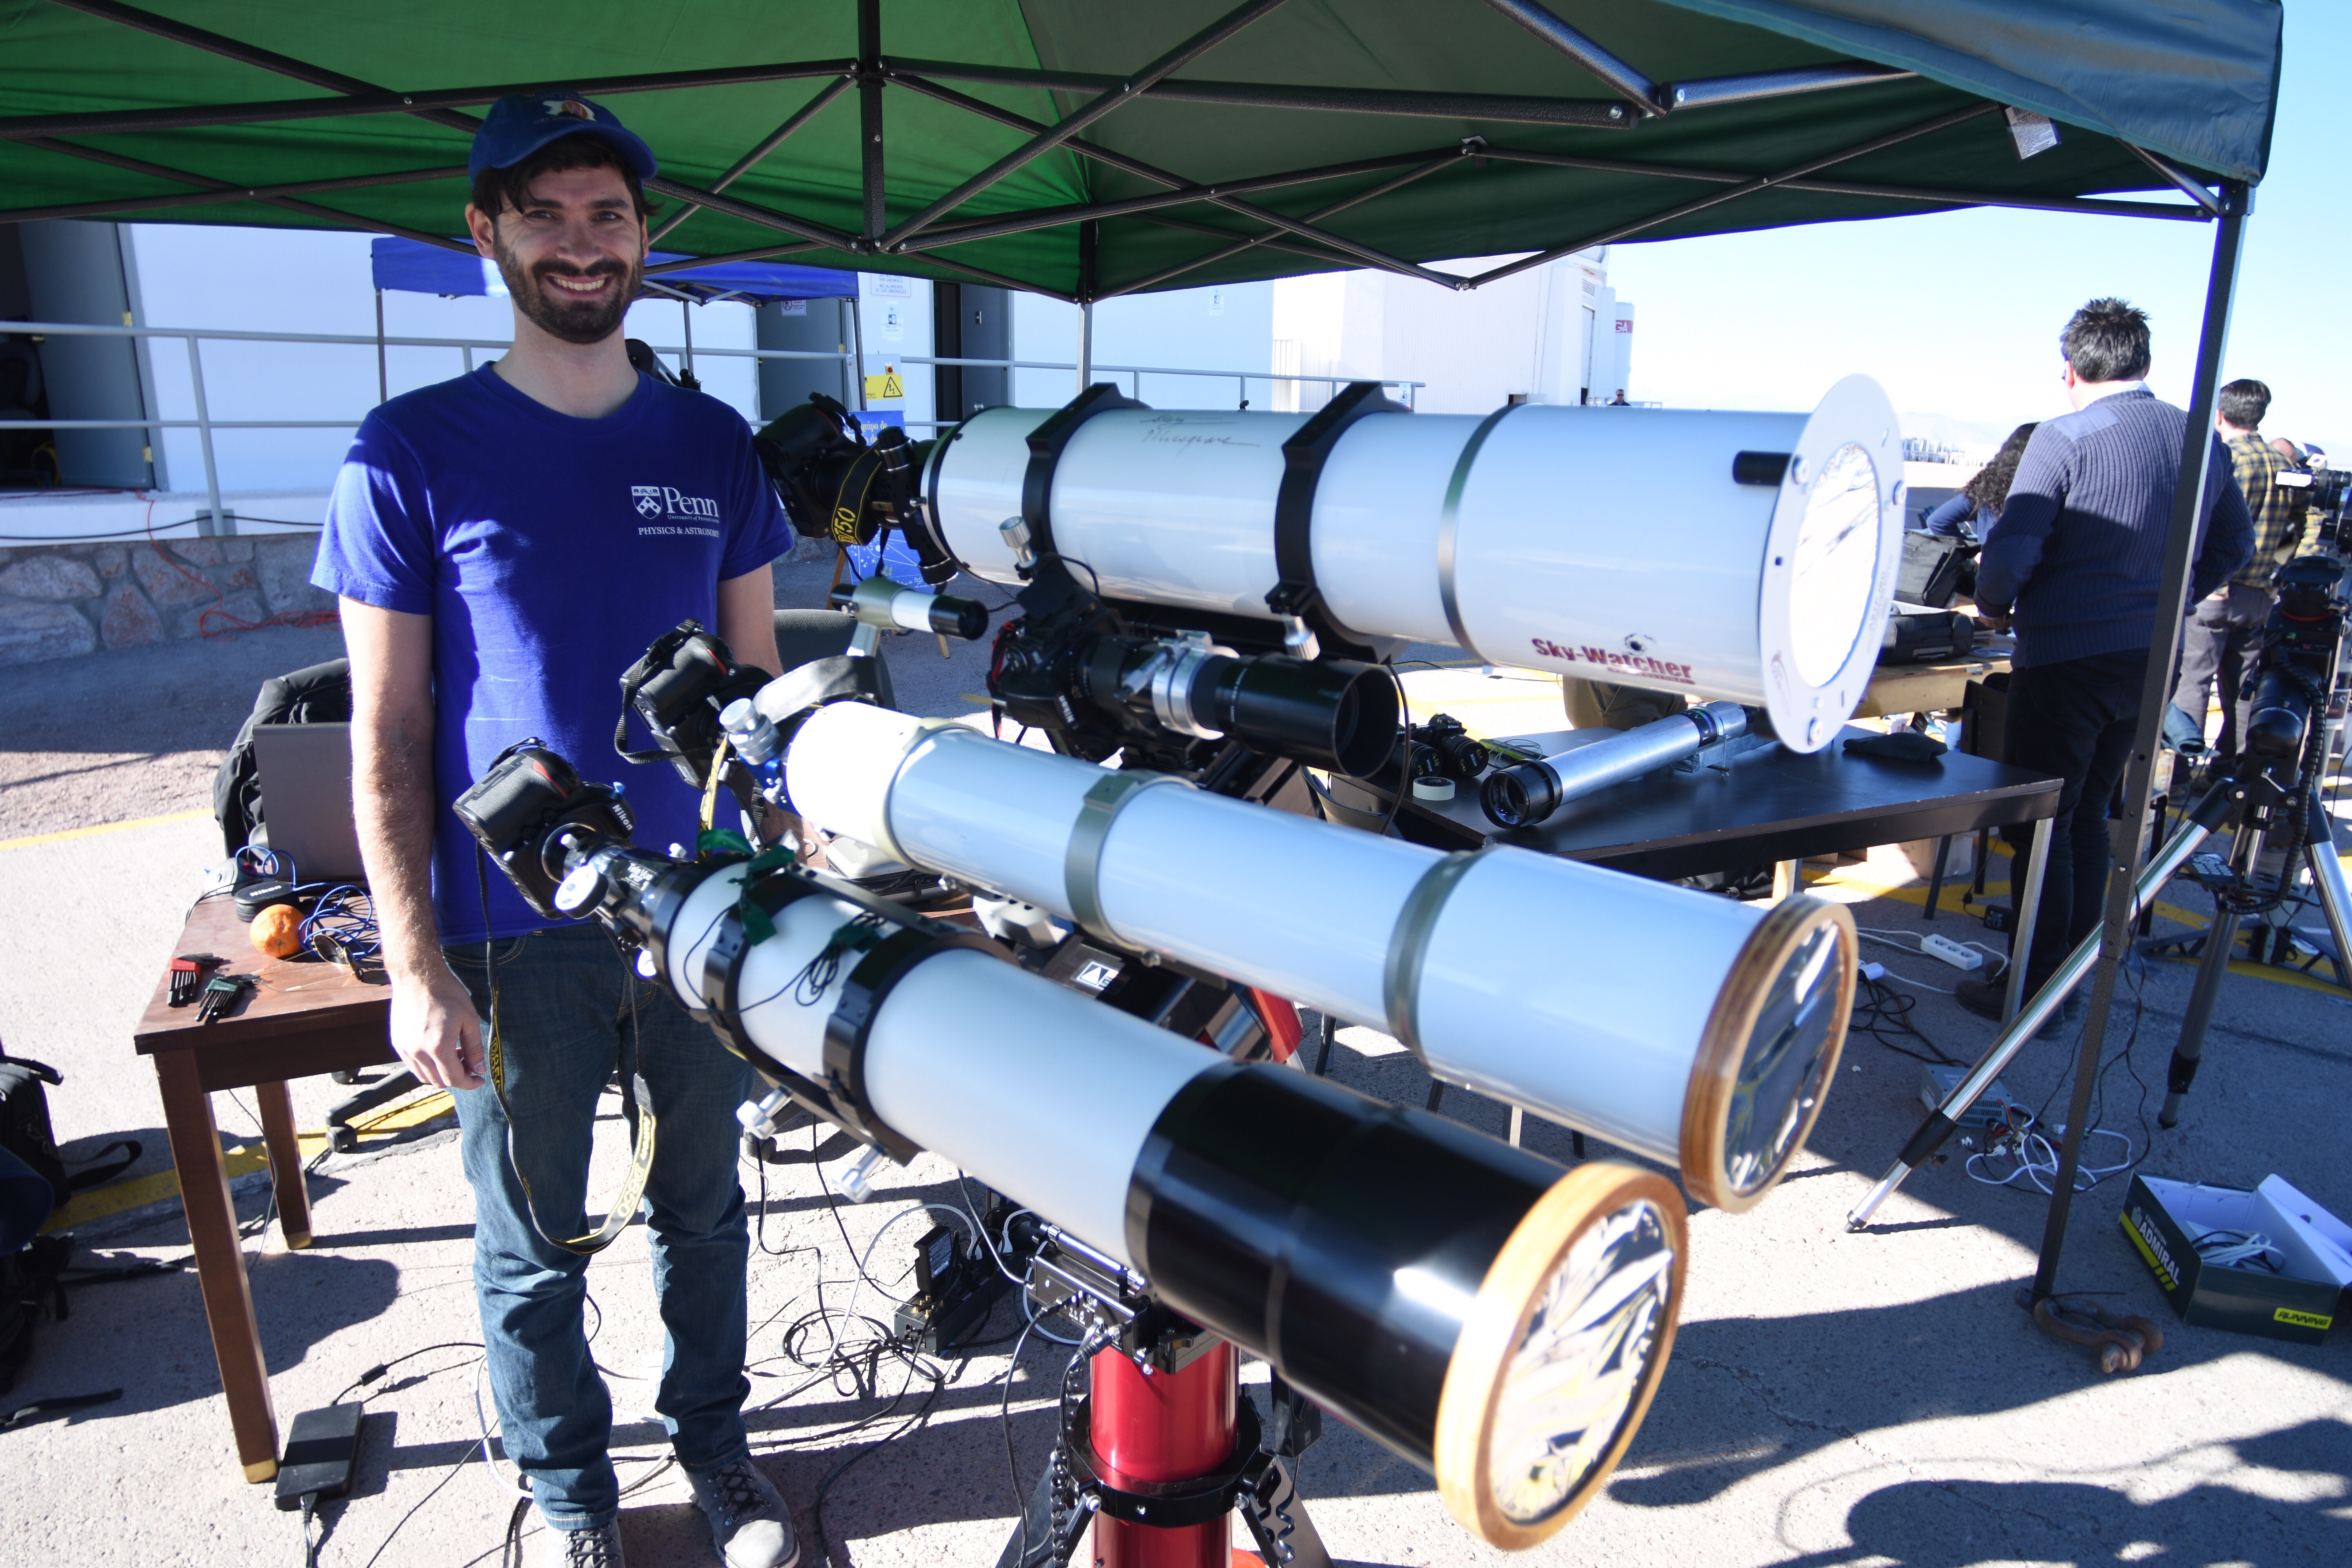 sliski posing with the three telescopes